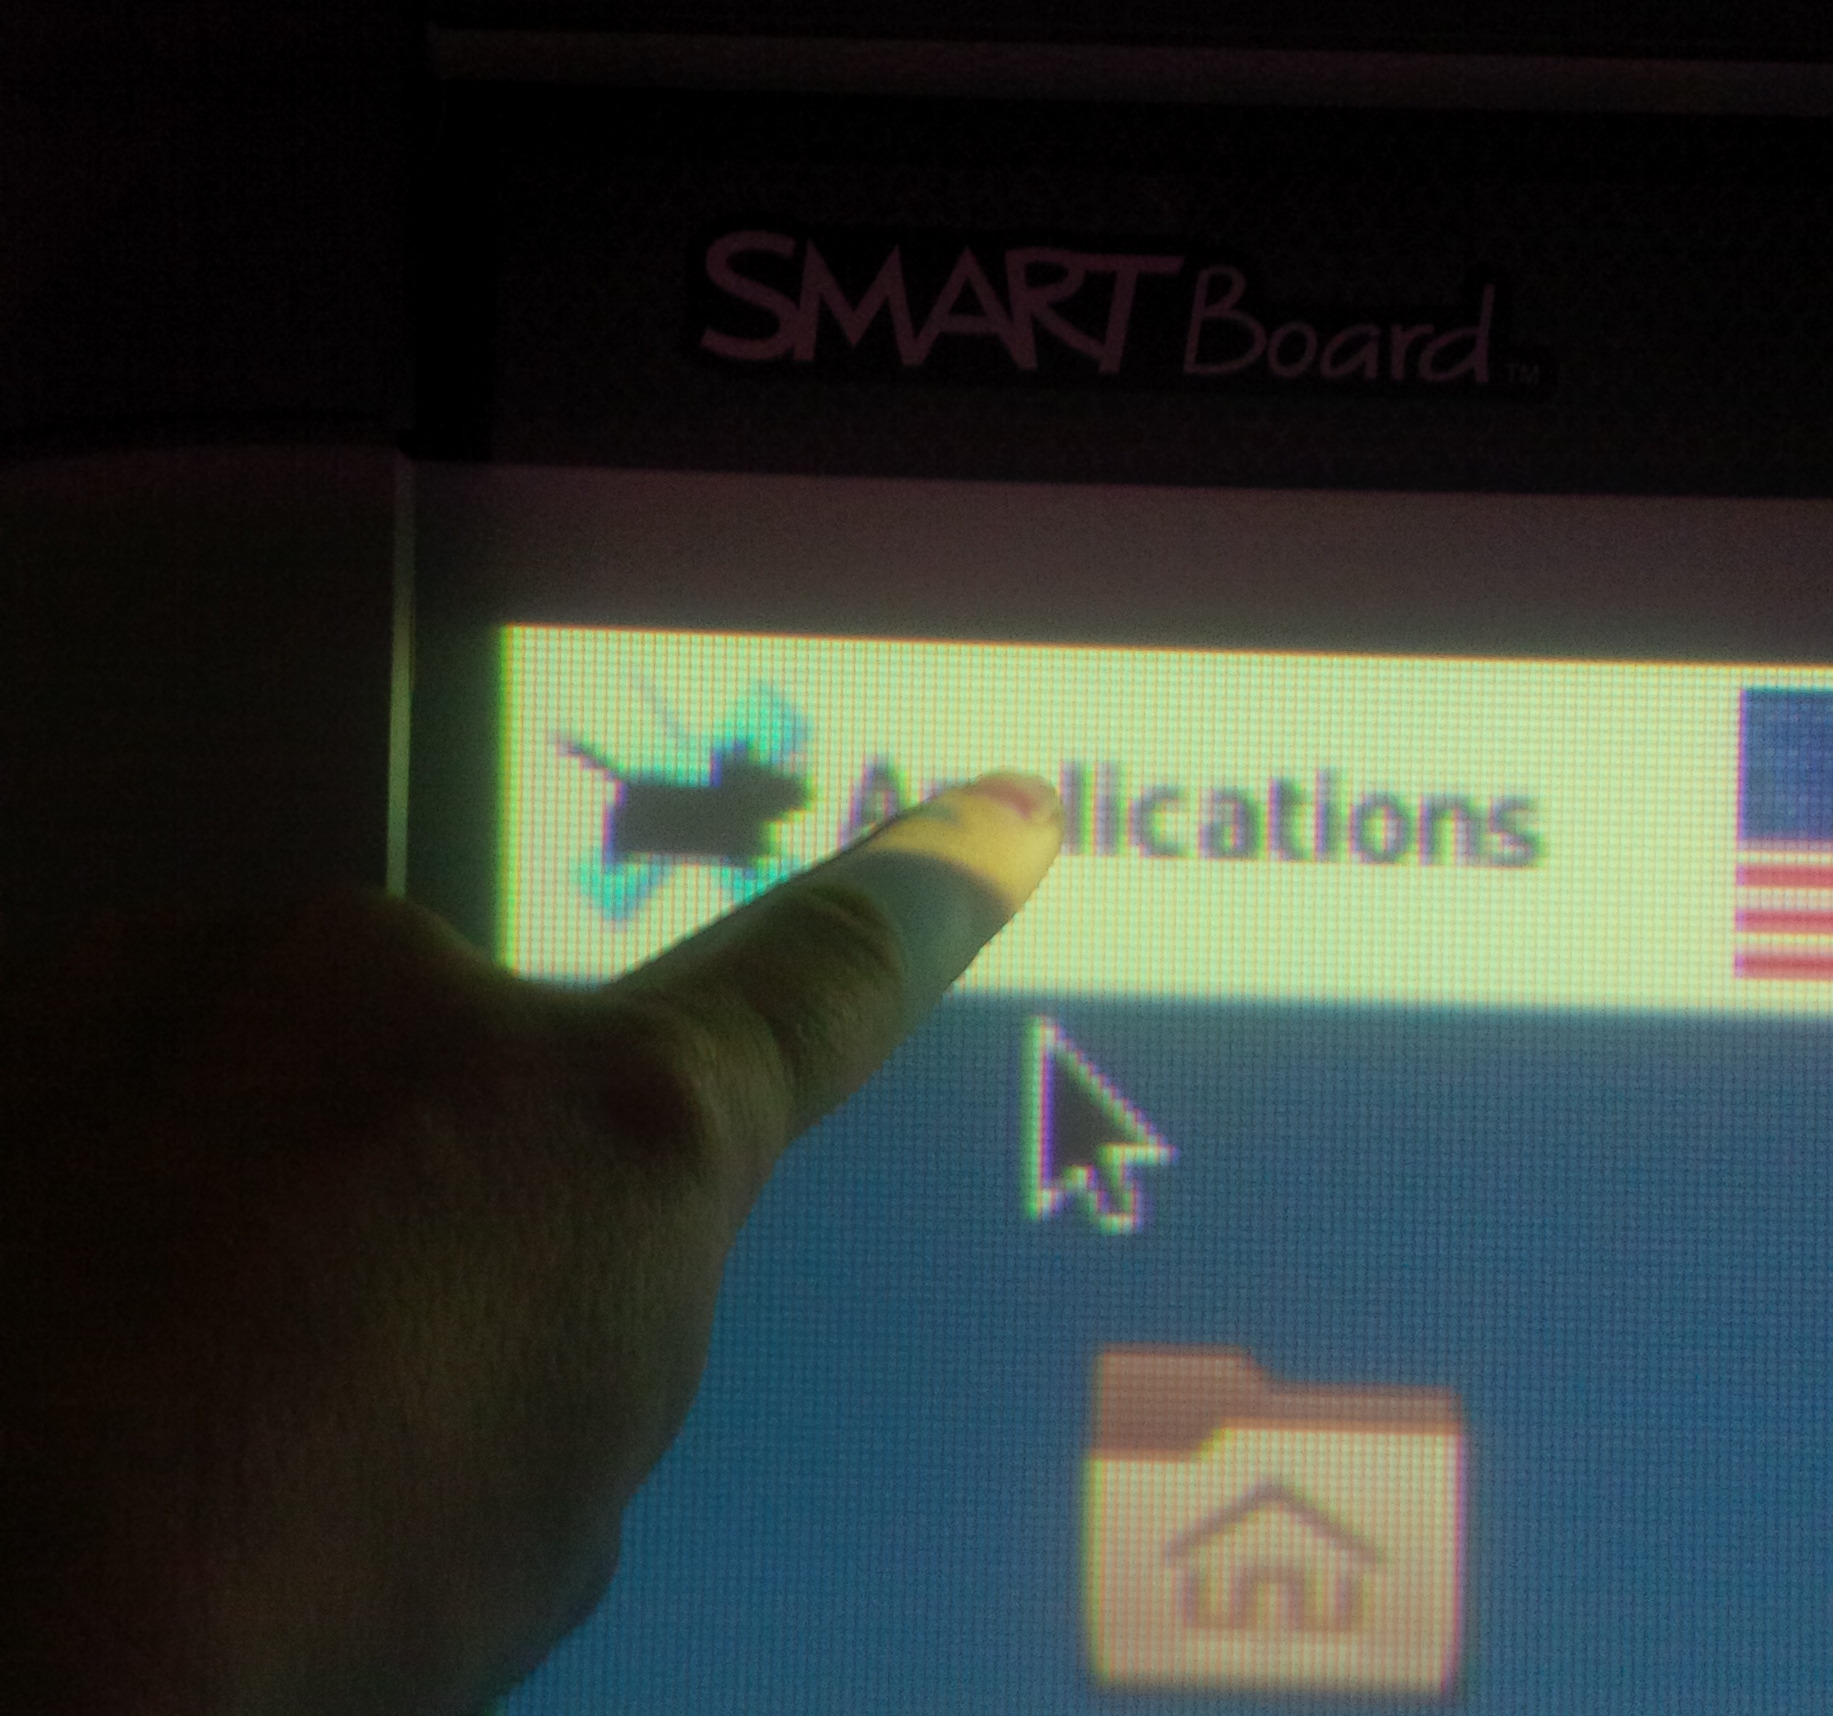 Pozice kurzoru u nezkalibrovaného smartboardu